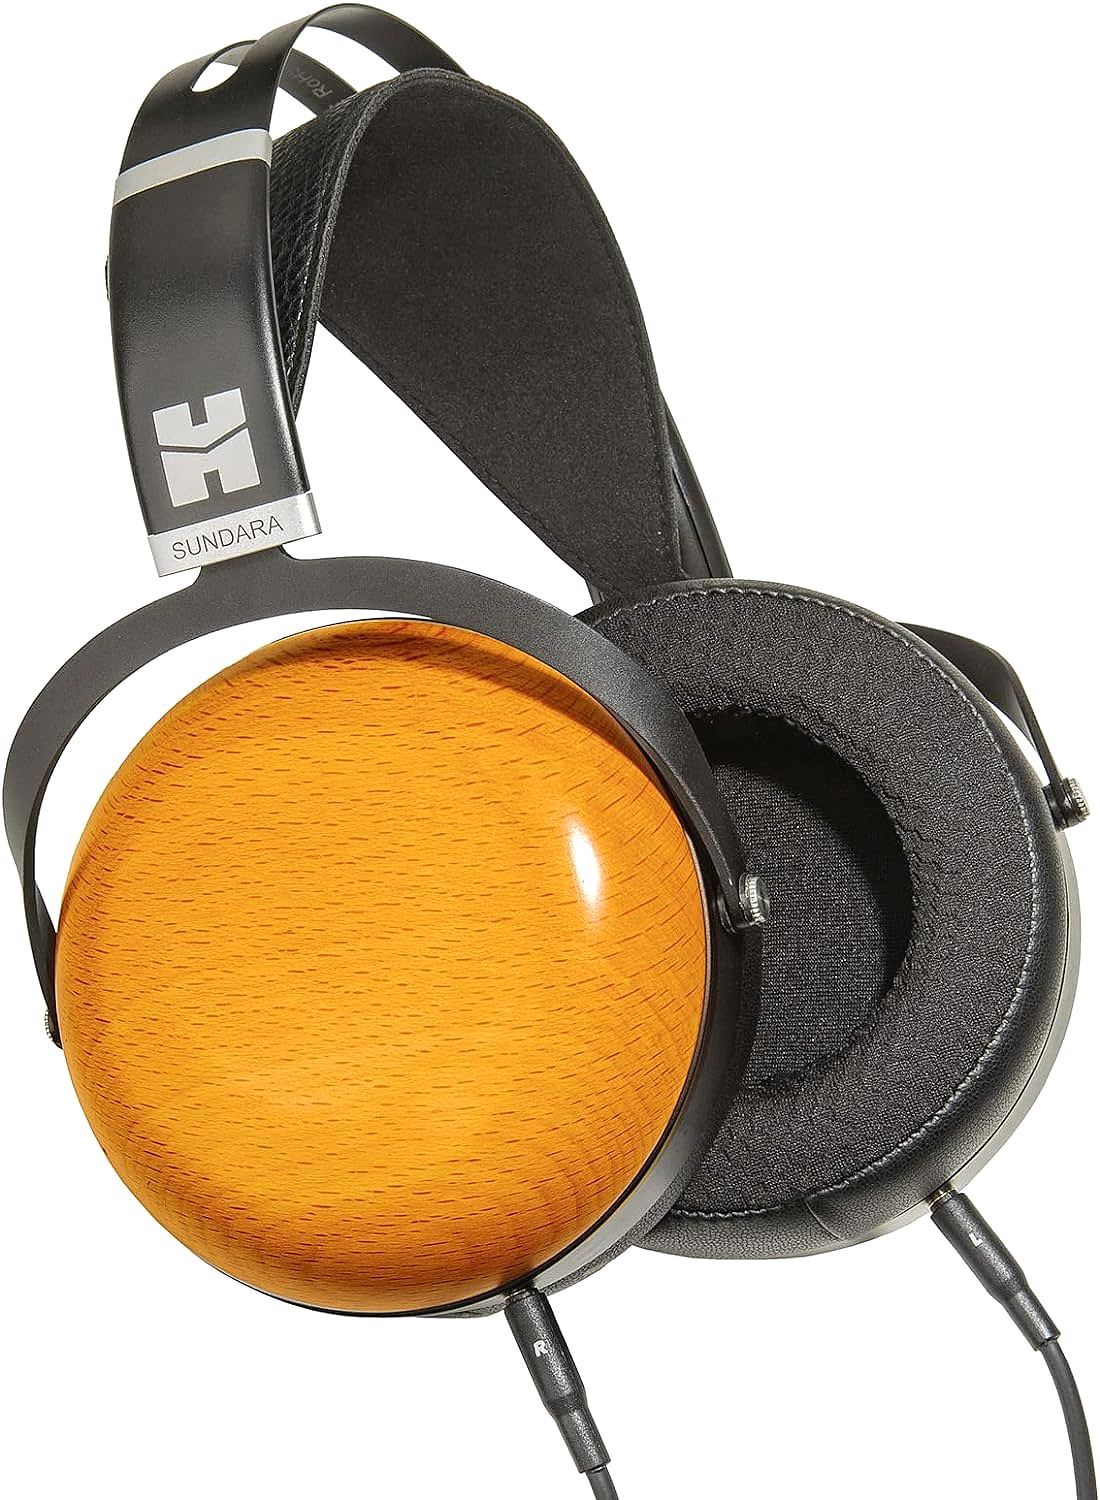  HIFIMAN SUNDARA Closed-Back Over-Ear Planar Magnetic Wired Hi-Fi Headphones 